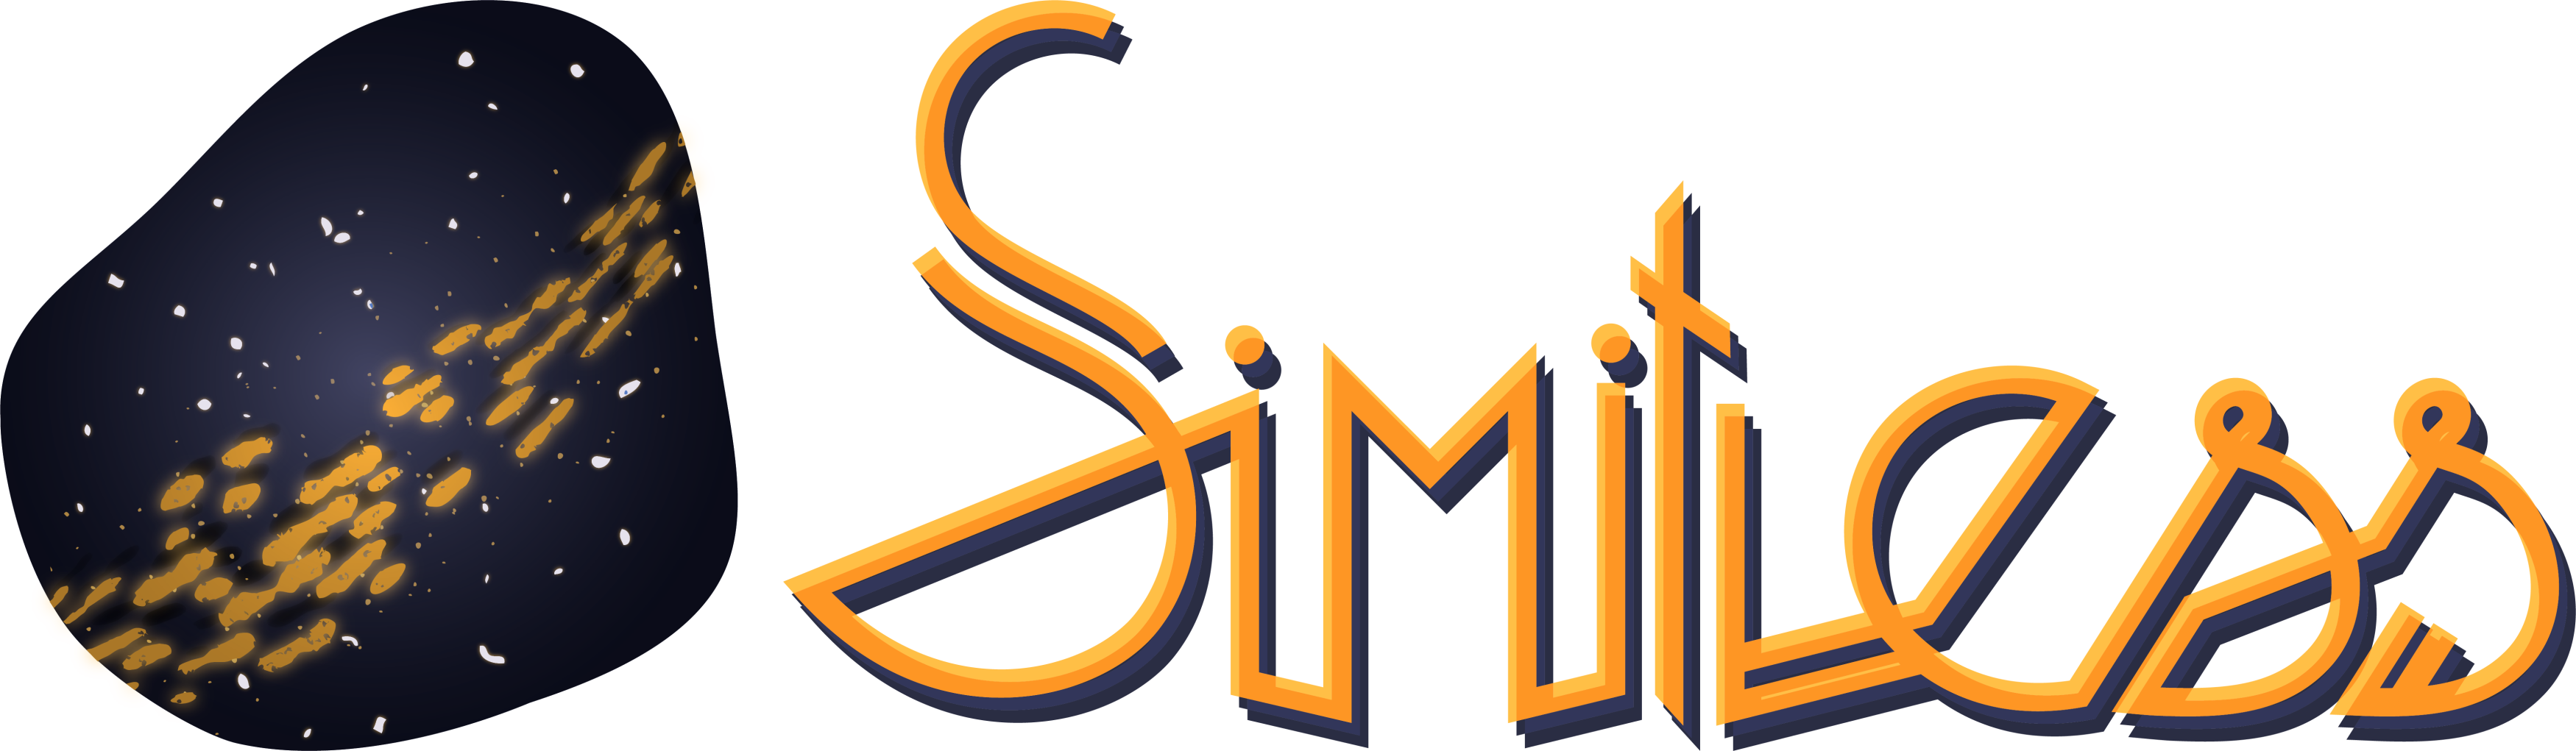 Simitless logo horizontal with name